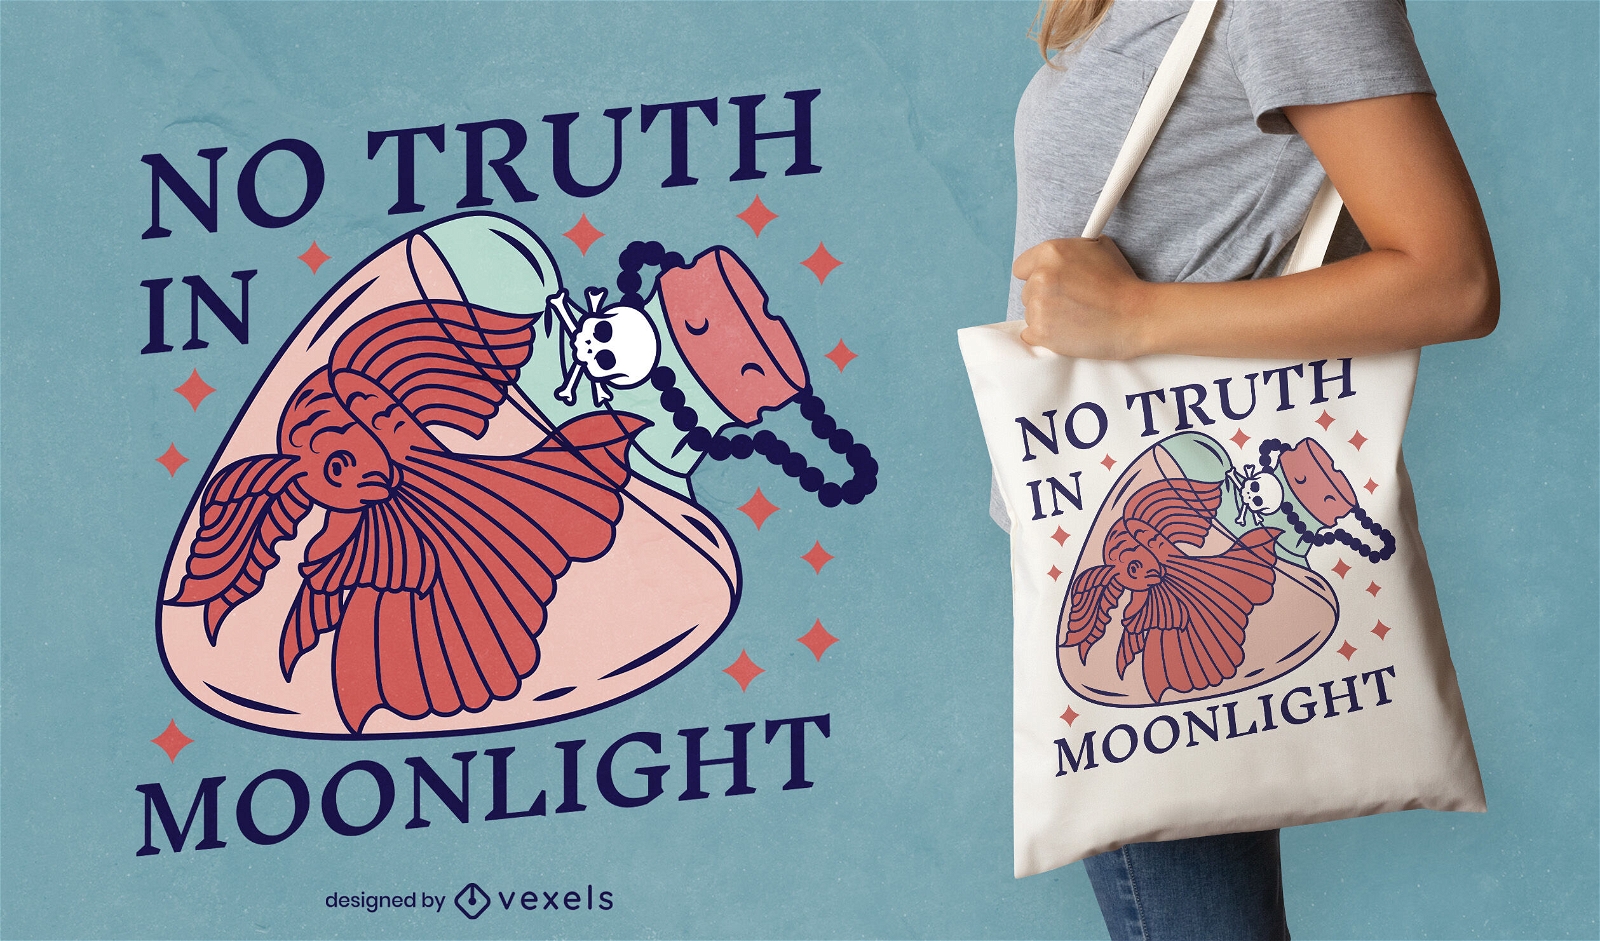 Mystical fish moonlight tote bag design